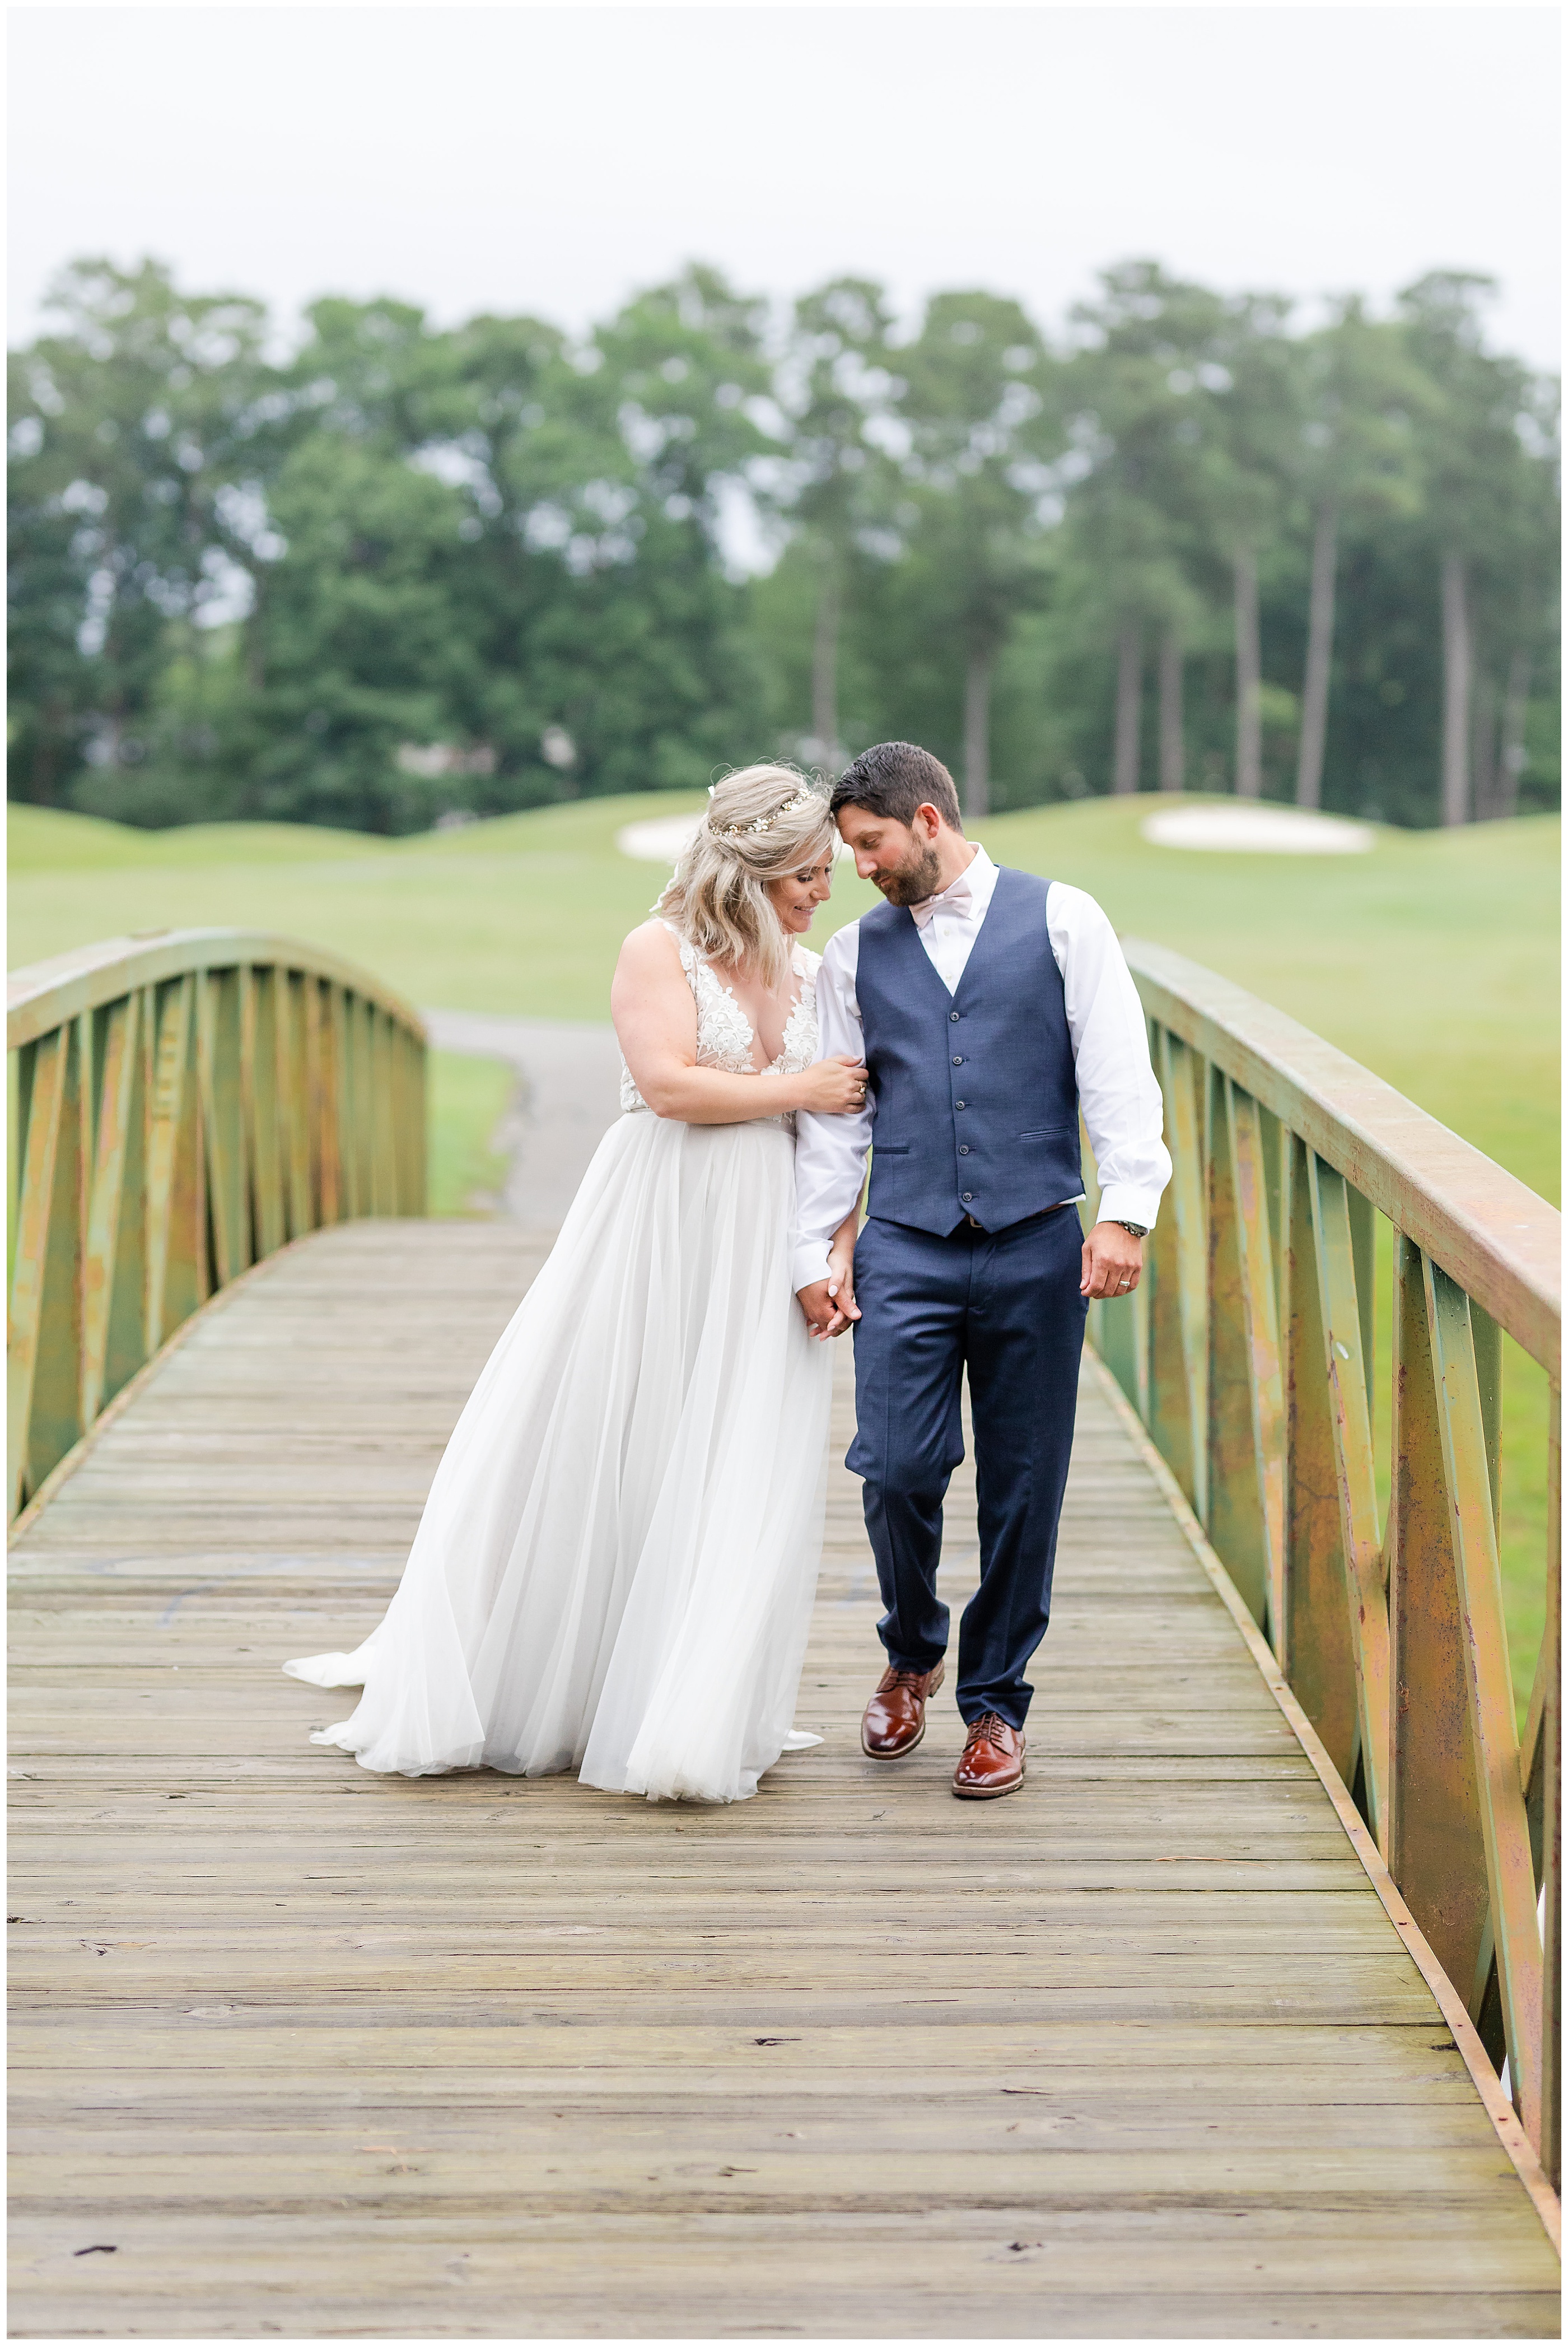 Weddings at Kiln Creek Golf Club Luke and Ashley Photography 